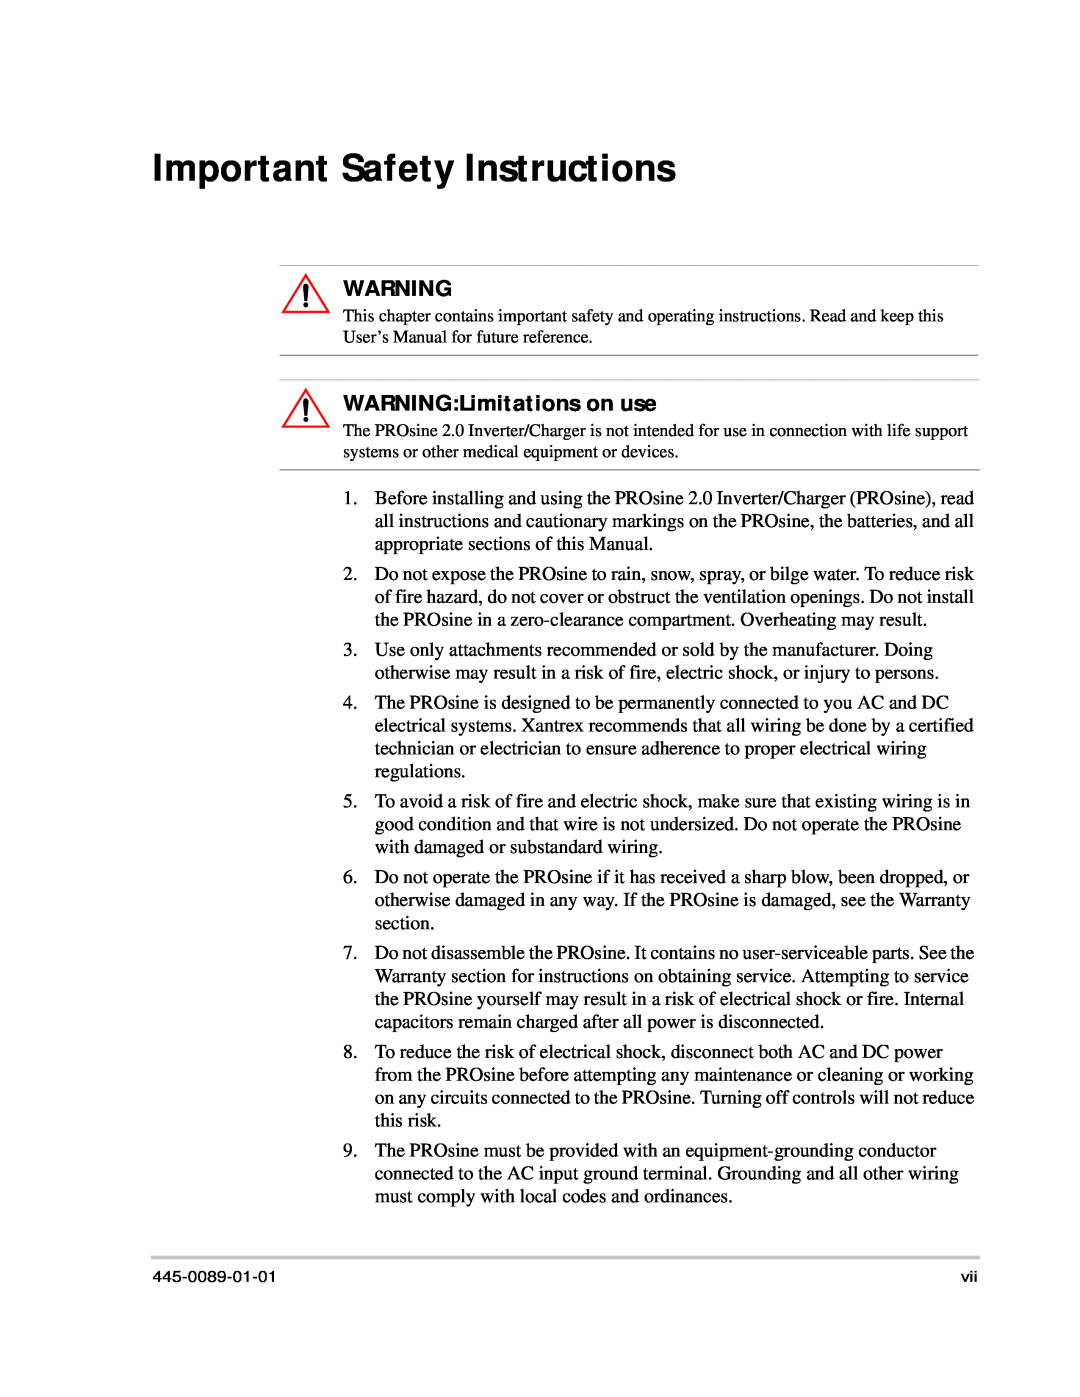 Xantrex Technology PROsine 2.0 user manual Important Safety Instructions, WARNINGLimitations on use 